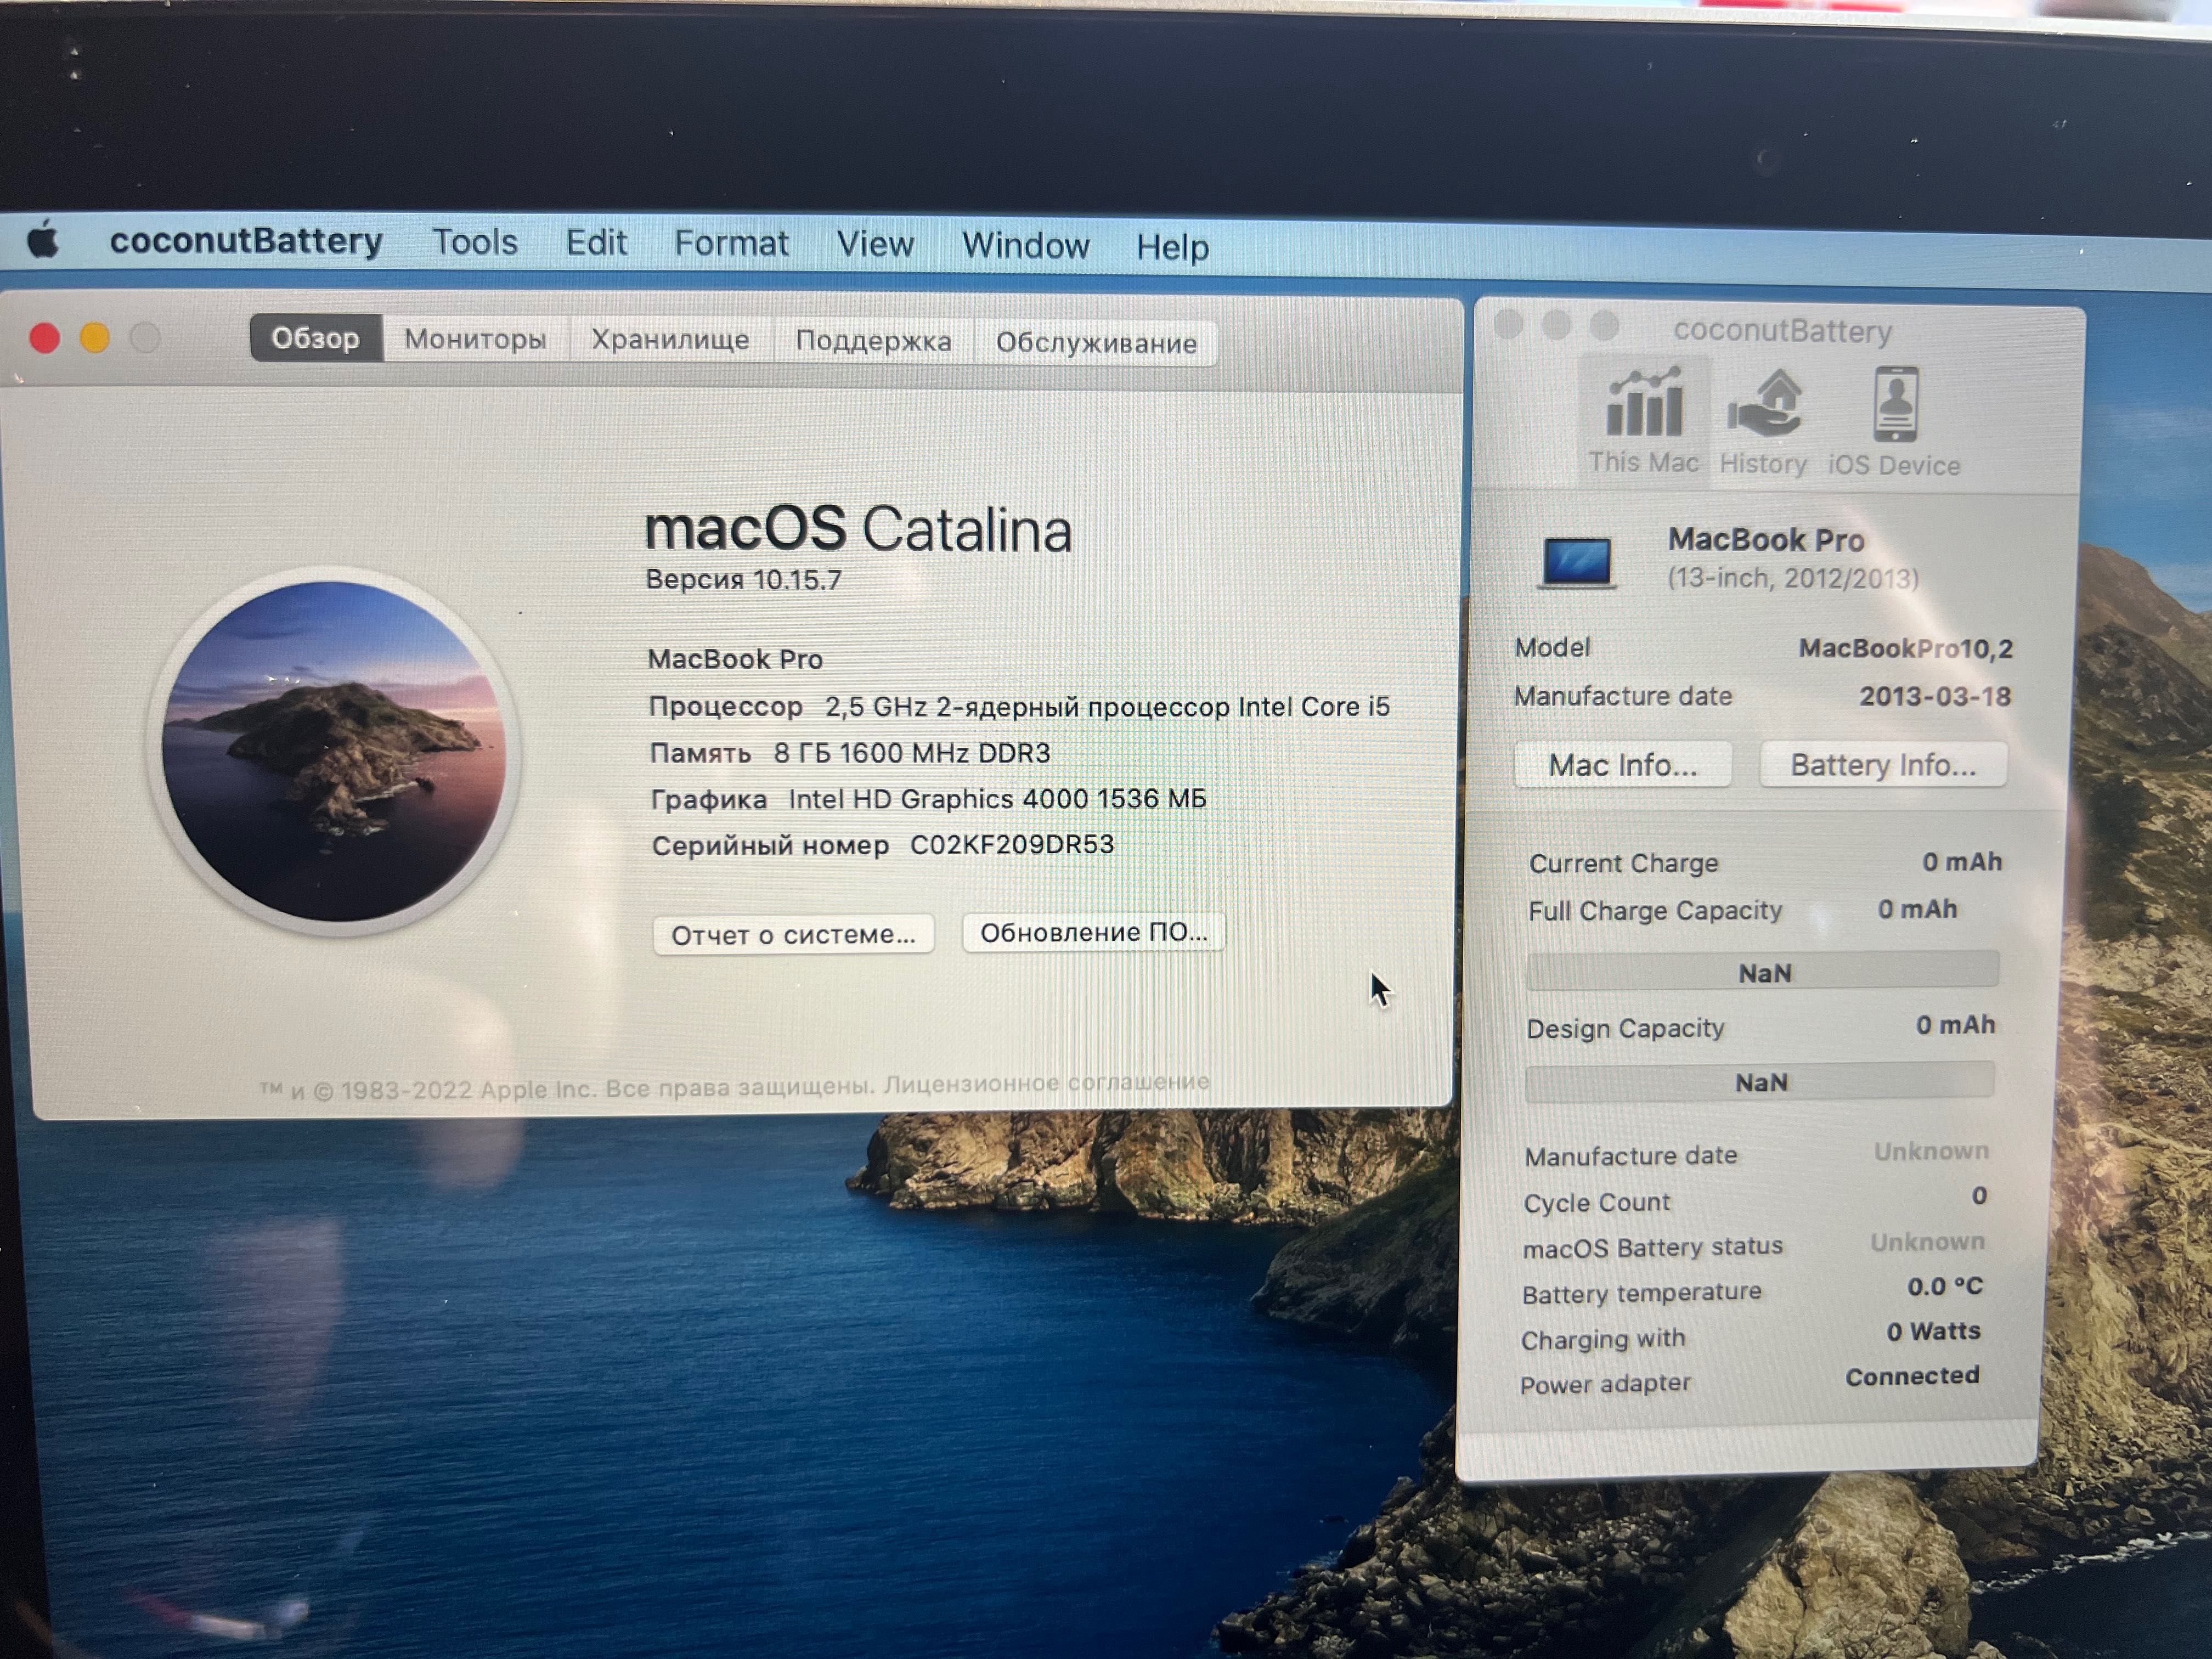 Apple Macbook Pro Retina 2013 i5 2.5 Ghz | 8Gb Ram | 500Gb SSD